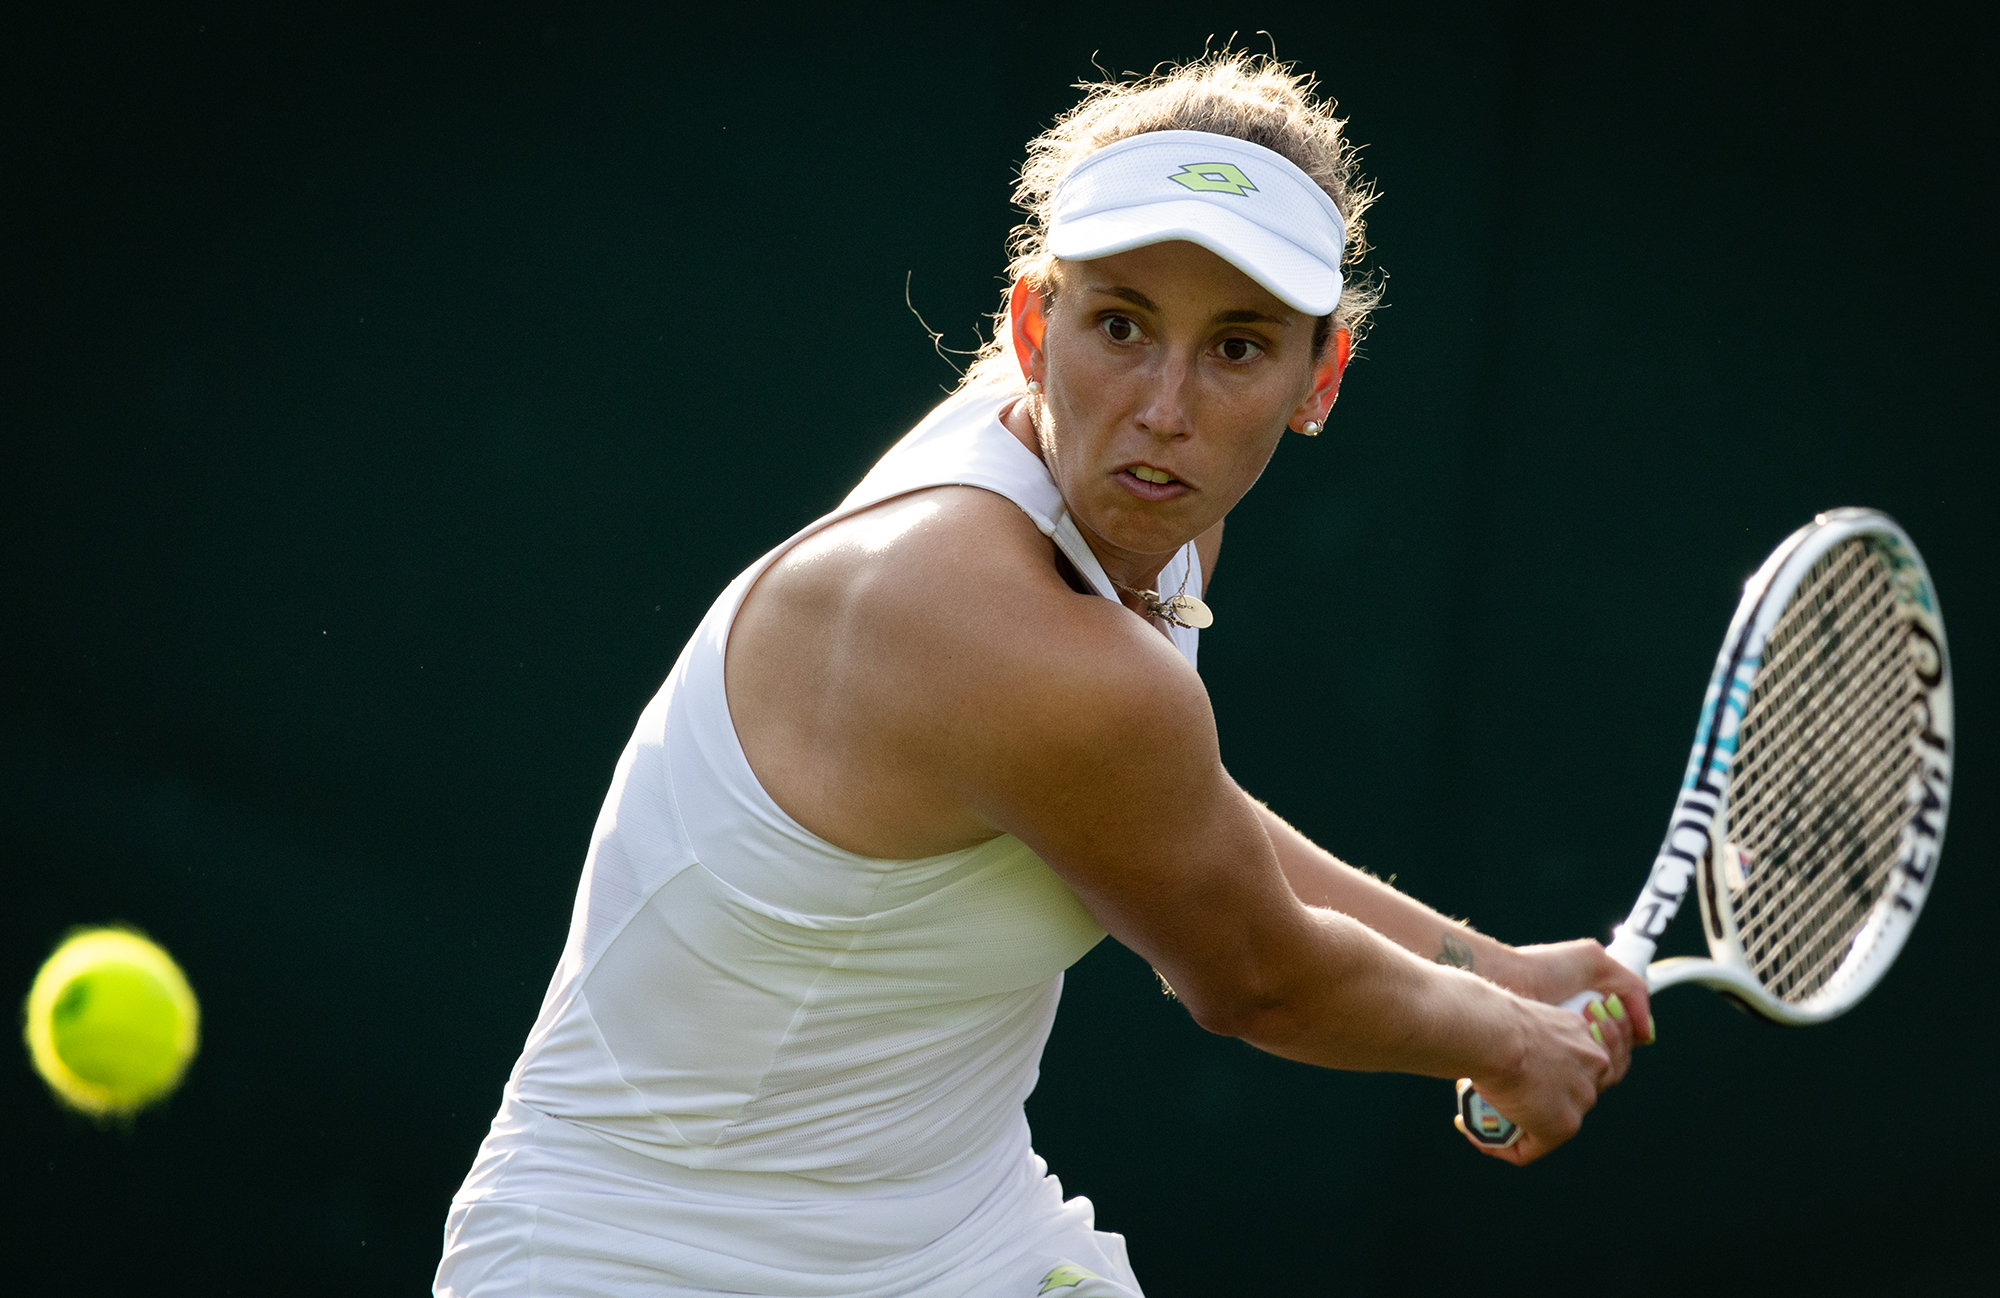 Elise Mertens beim Tennisturnier in Wimbledon (Bild: Benoit Doppagne/Belga)